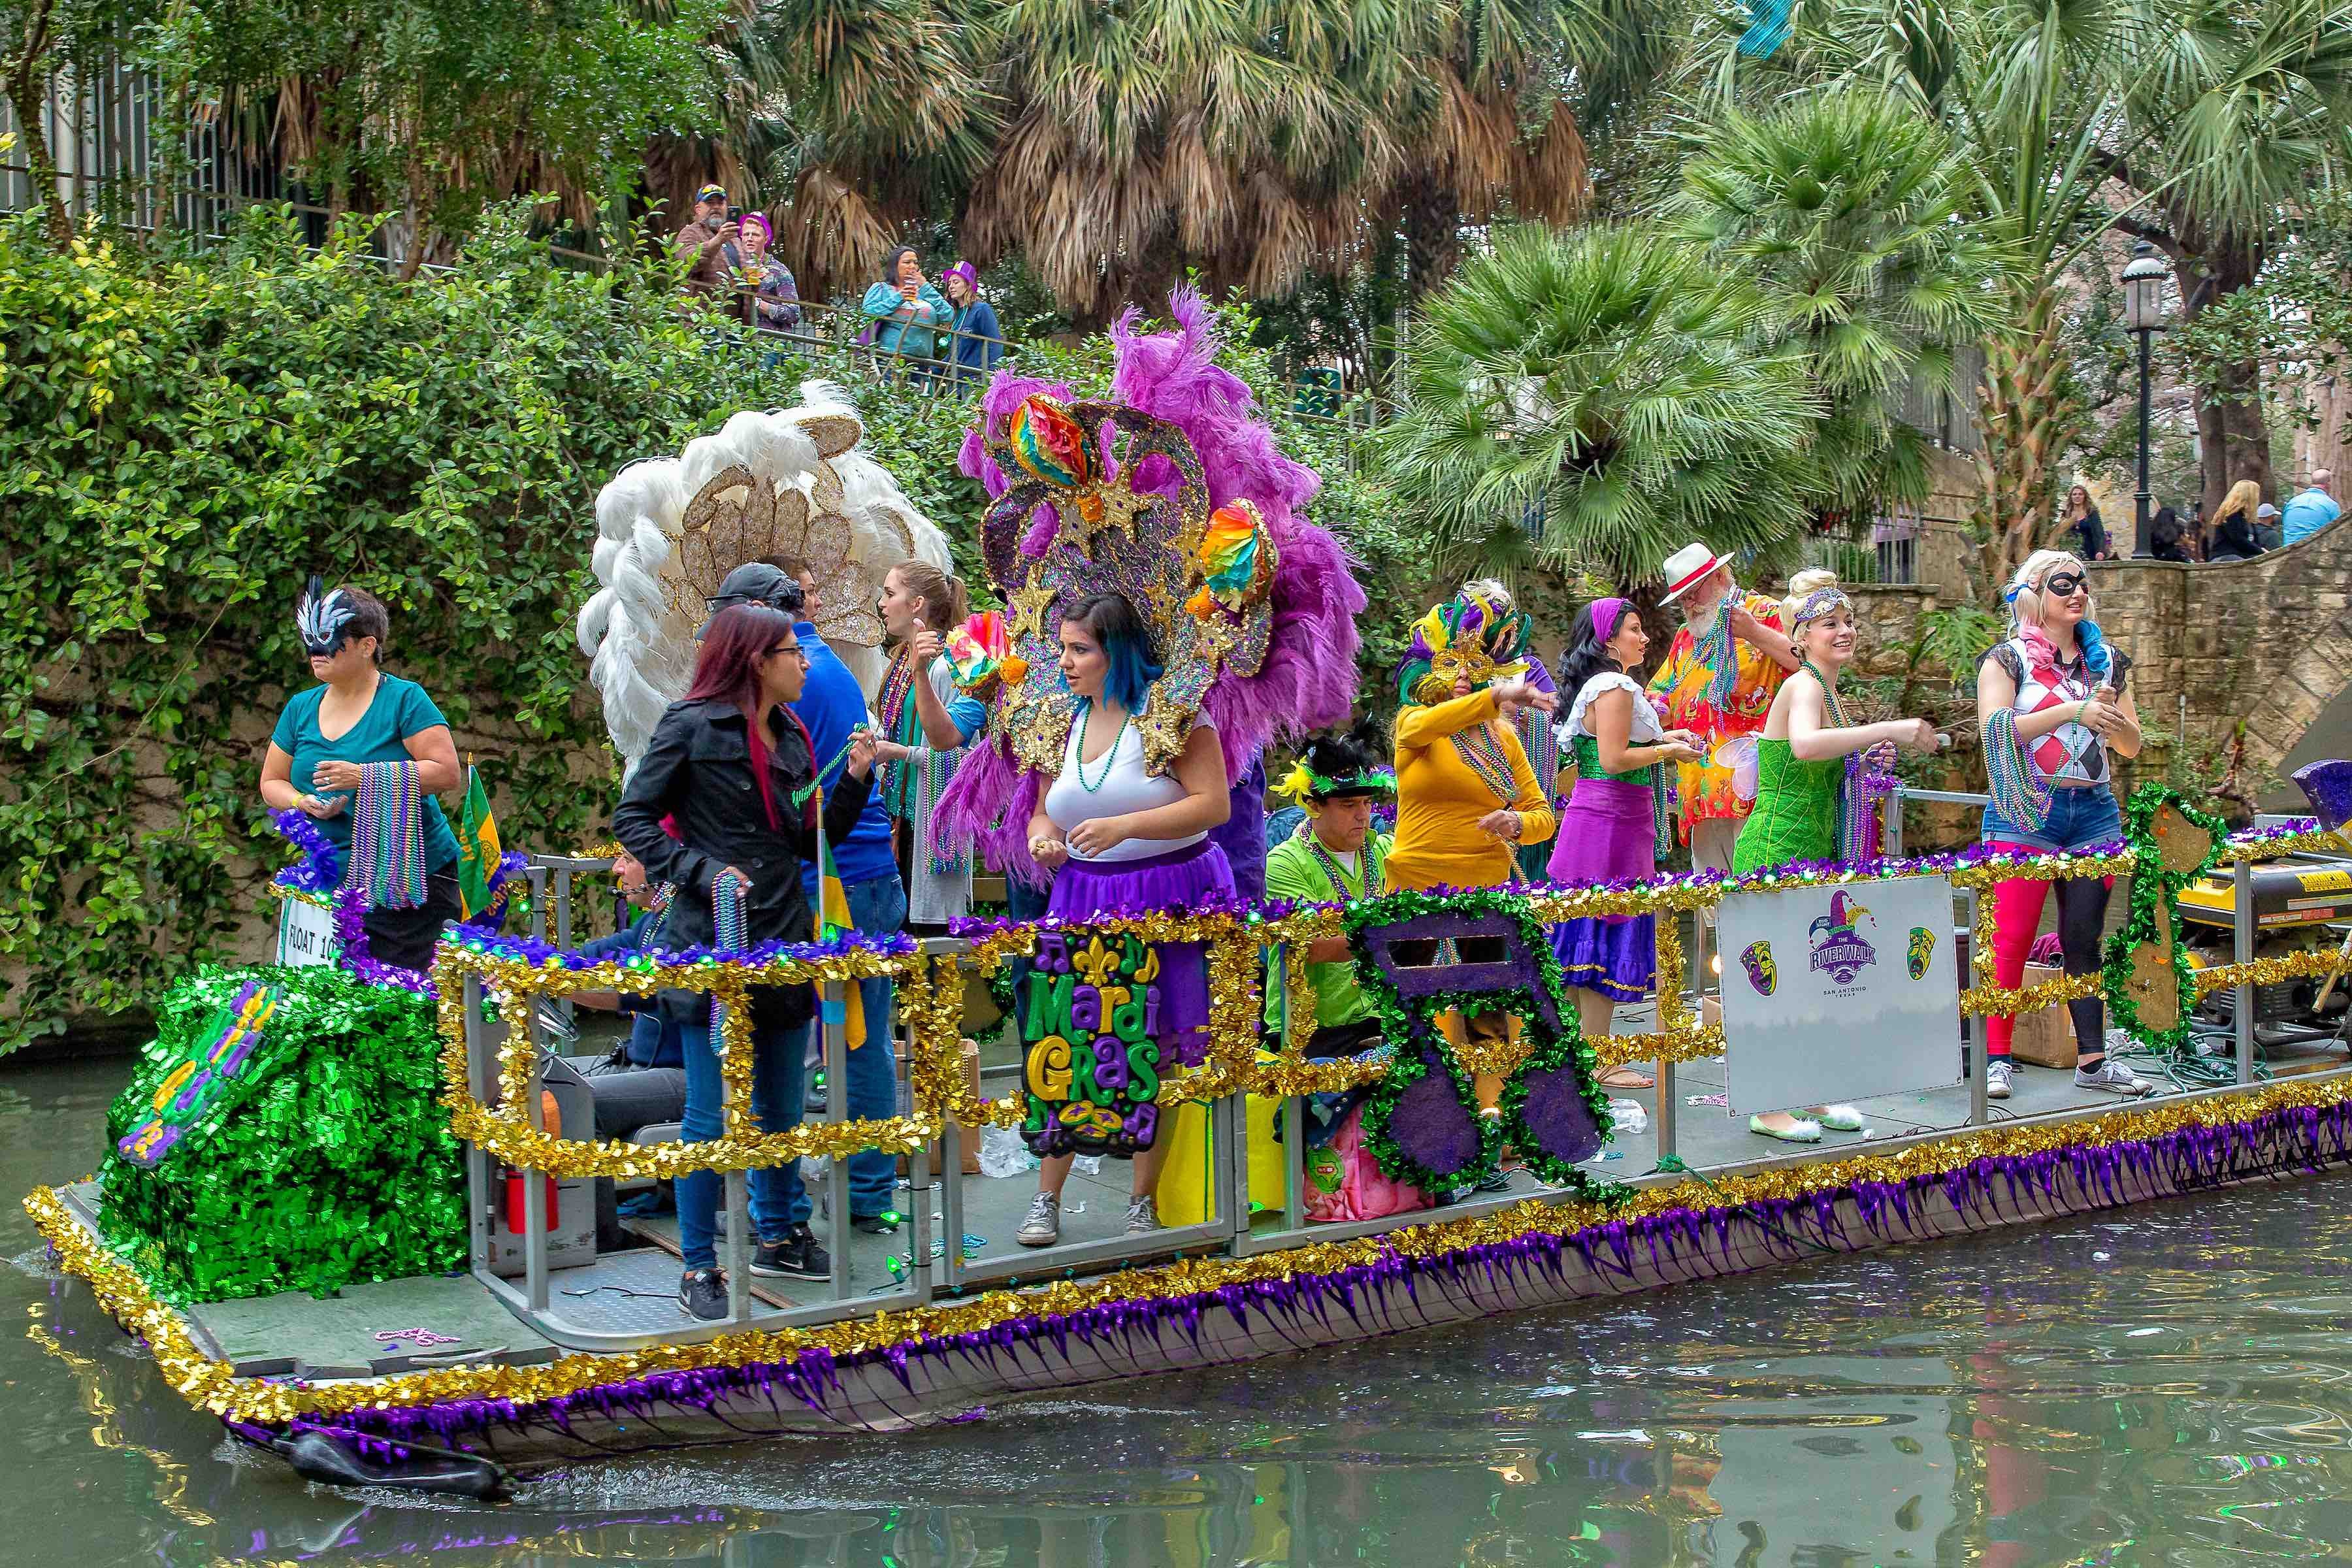 San Antonio's free Mardi Gras Festival and River Parade takes over the